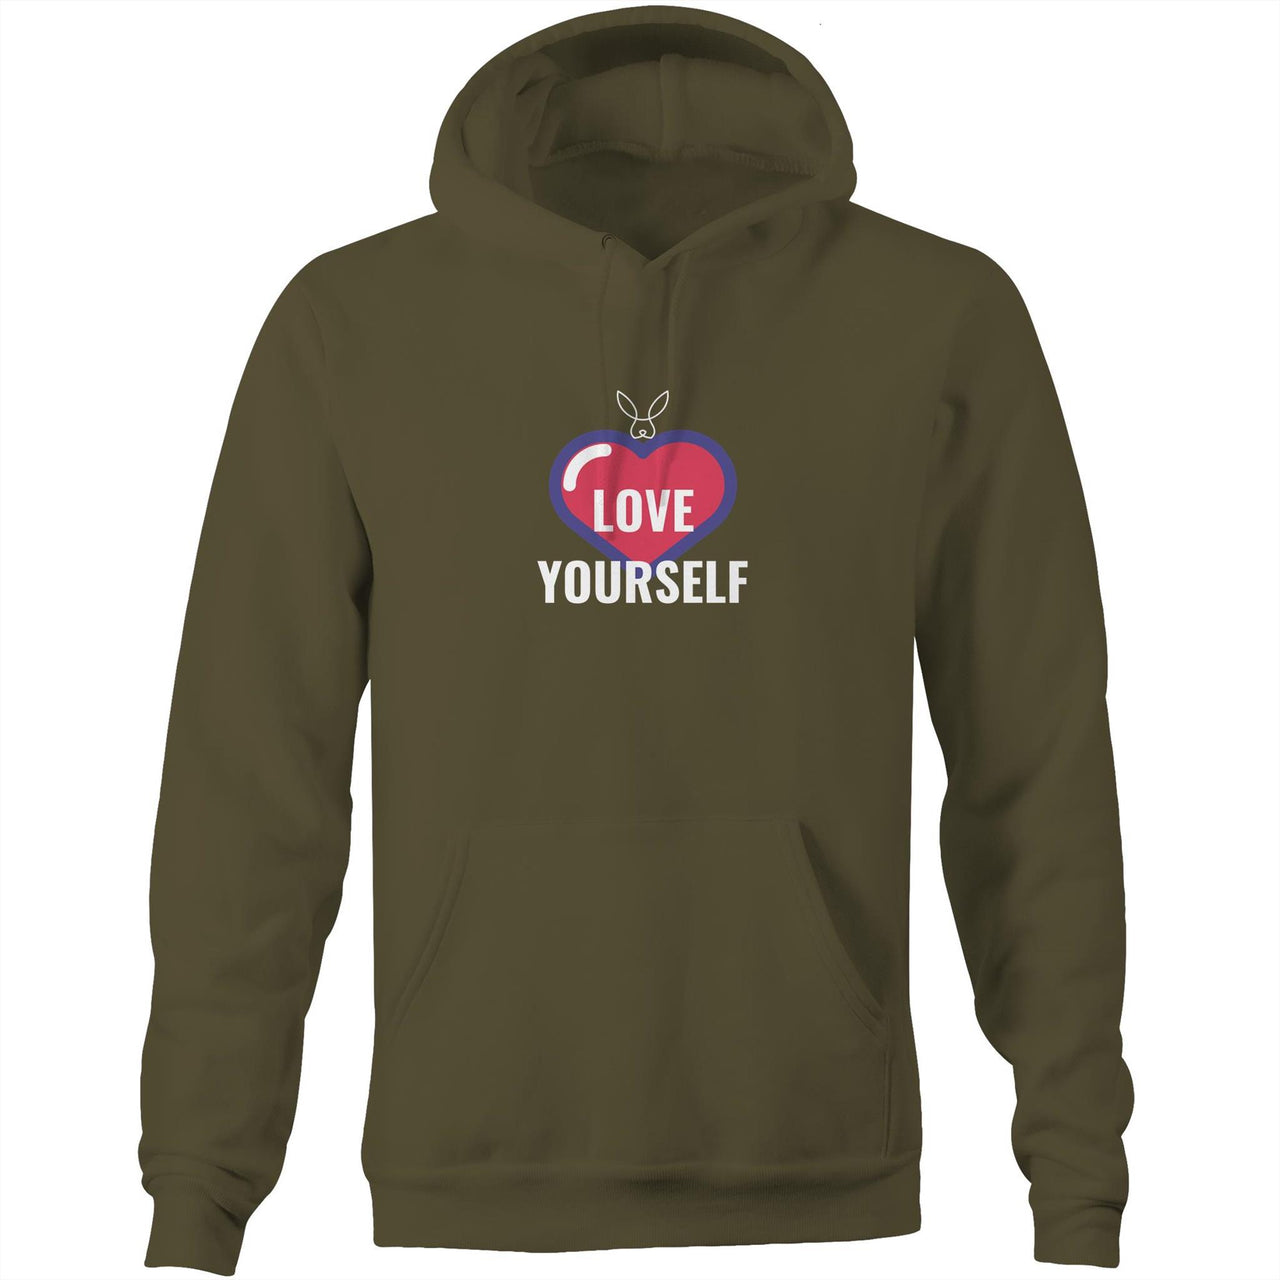 Love Yourself Pocket Hoodie Sweatshirt. unisex mens womens white army green